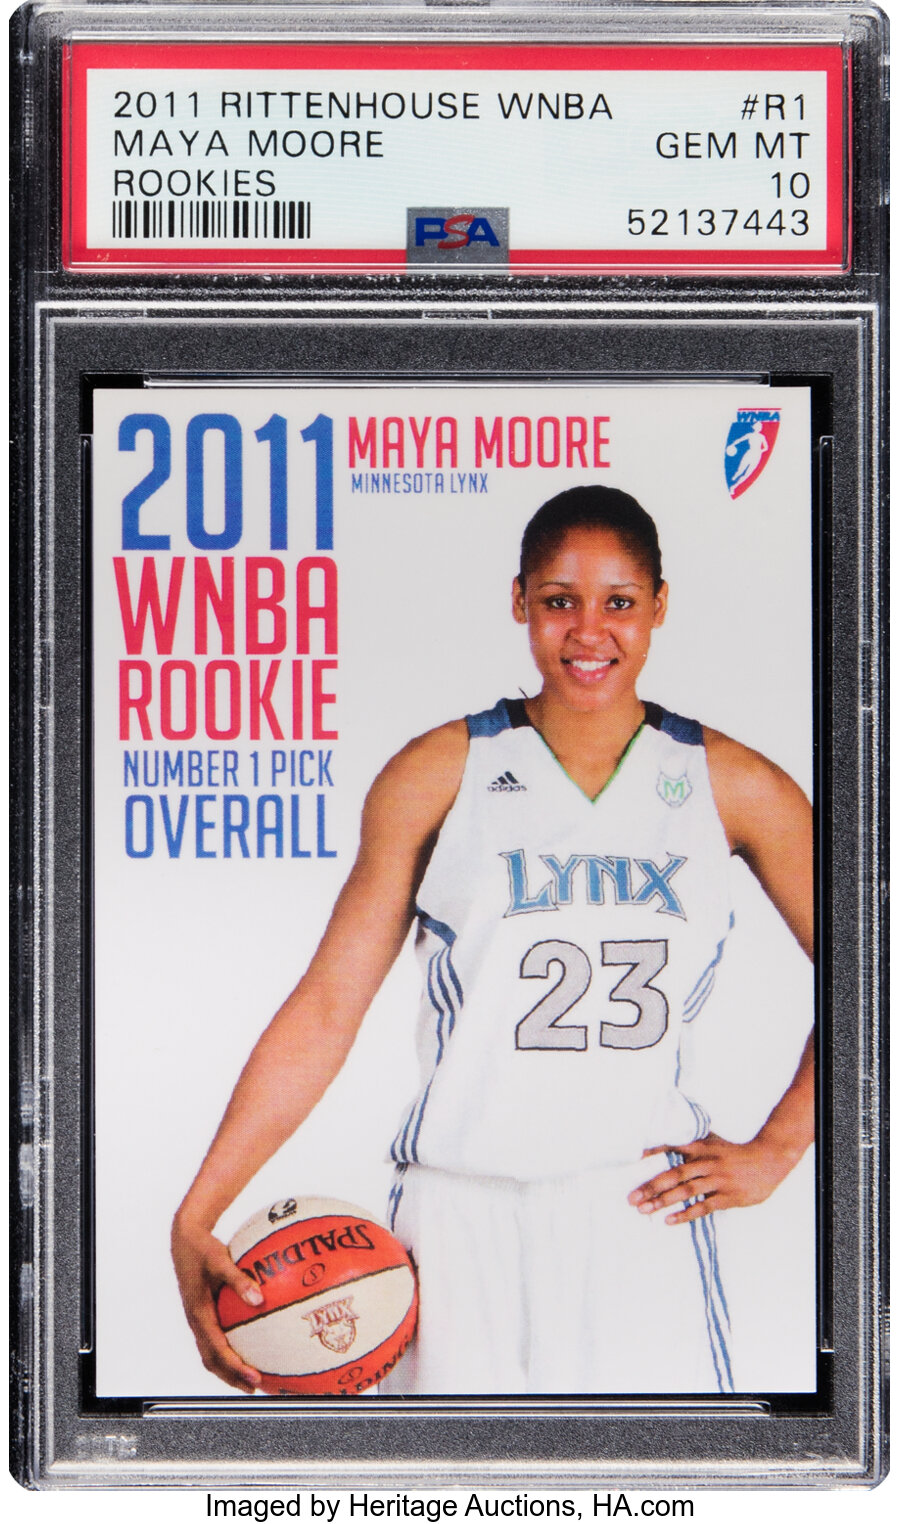 2011 Rittenhouse WNBA Maya Moore (Rookies) #R1 PSA Gem Mint 10 - #'d 91/225